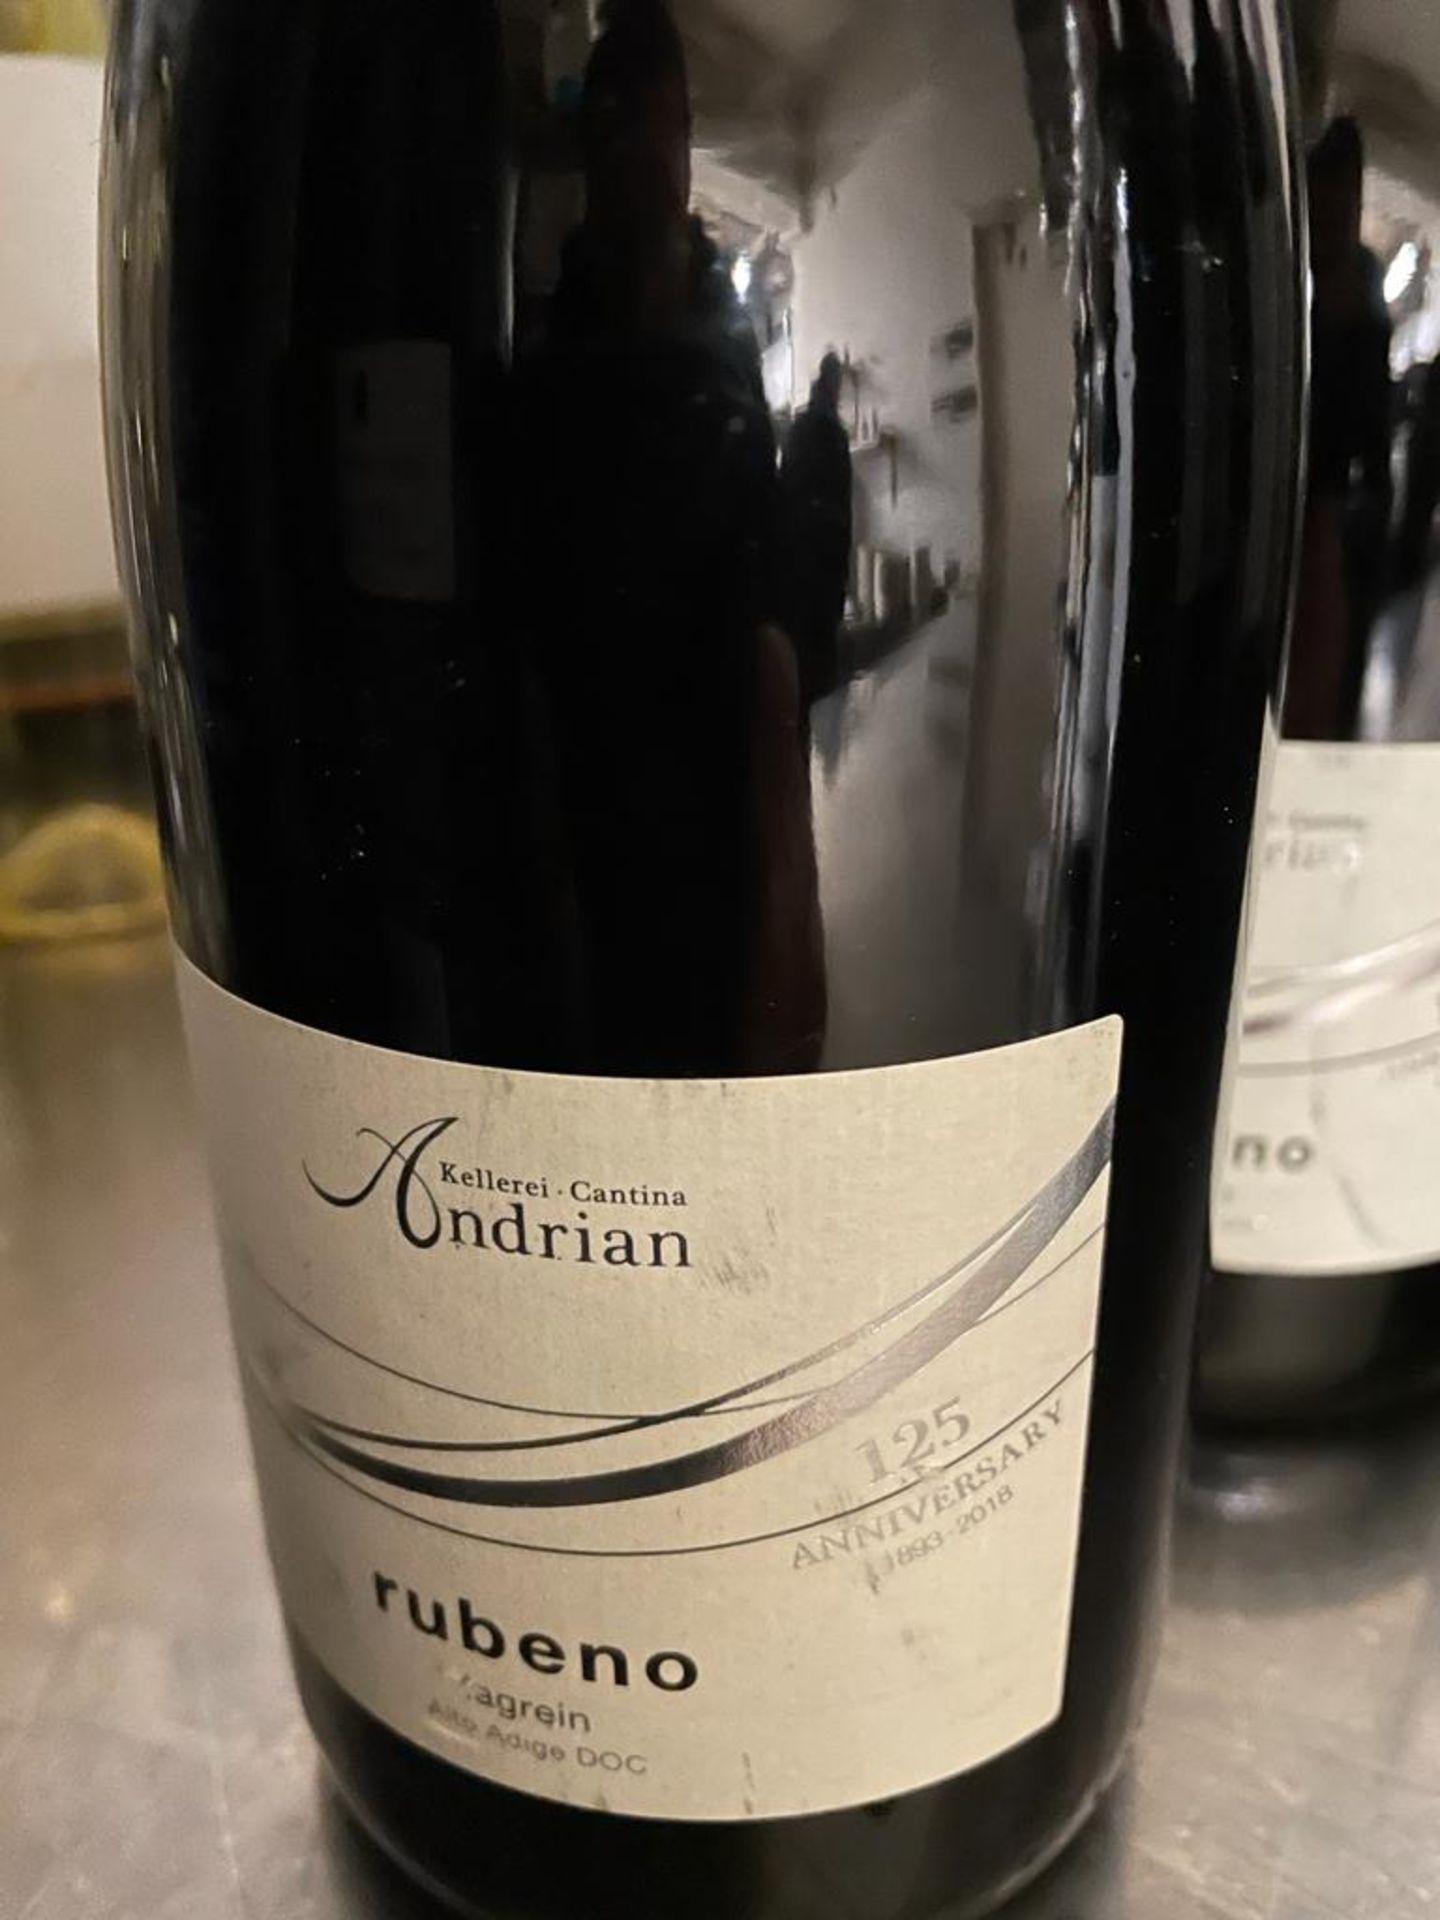 3 x Bottles Of RUBENO LAGRIEN - 2017 - 75cl - New/Unopened Restaurant Stock - Ref: CAM652 - Image 3 of 3